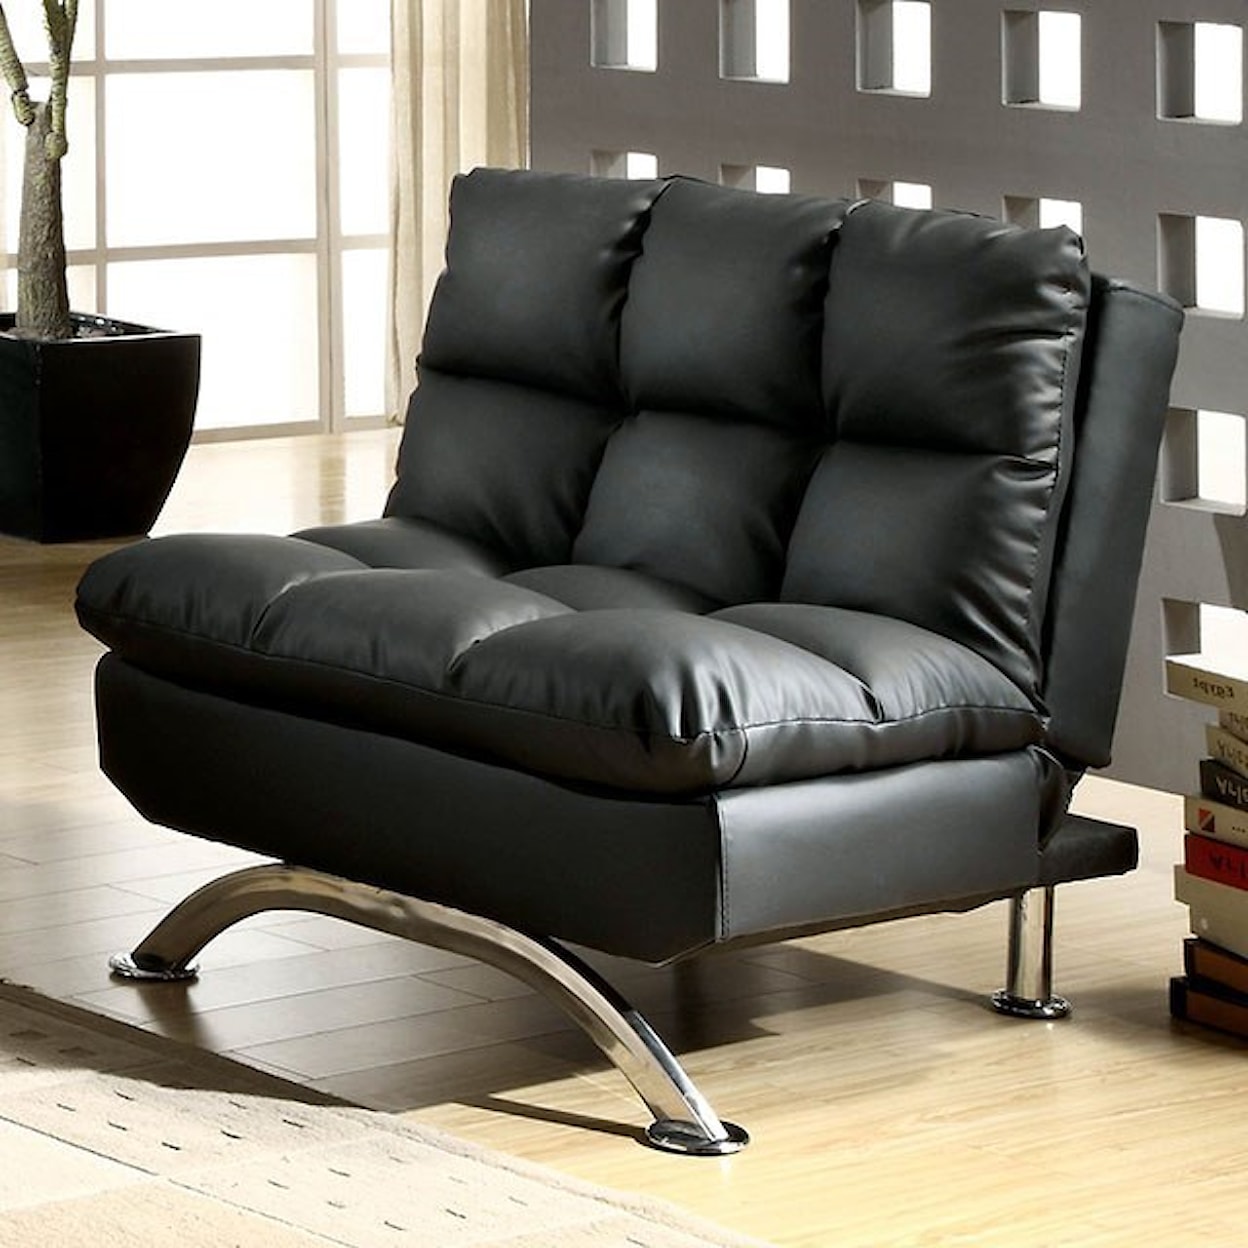 Furniture of America Aristo Chair